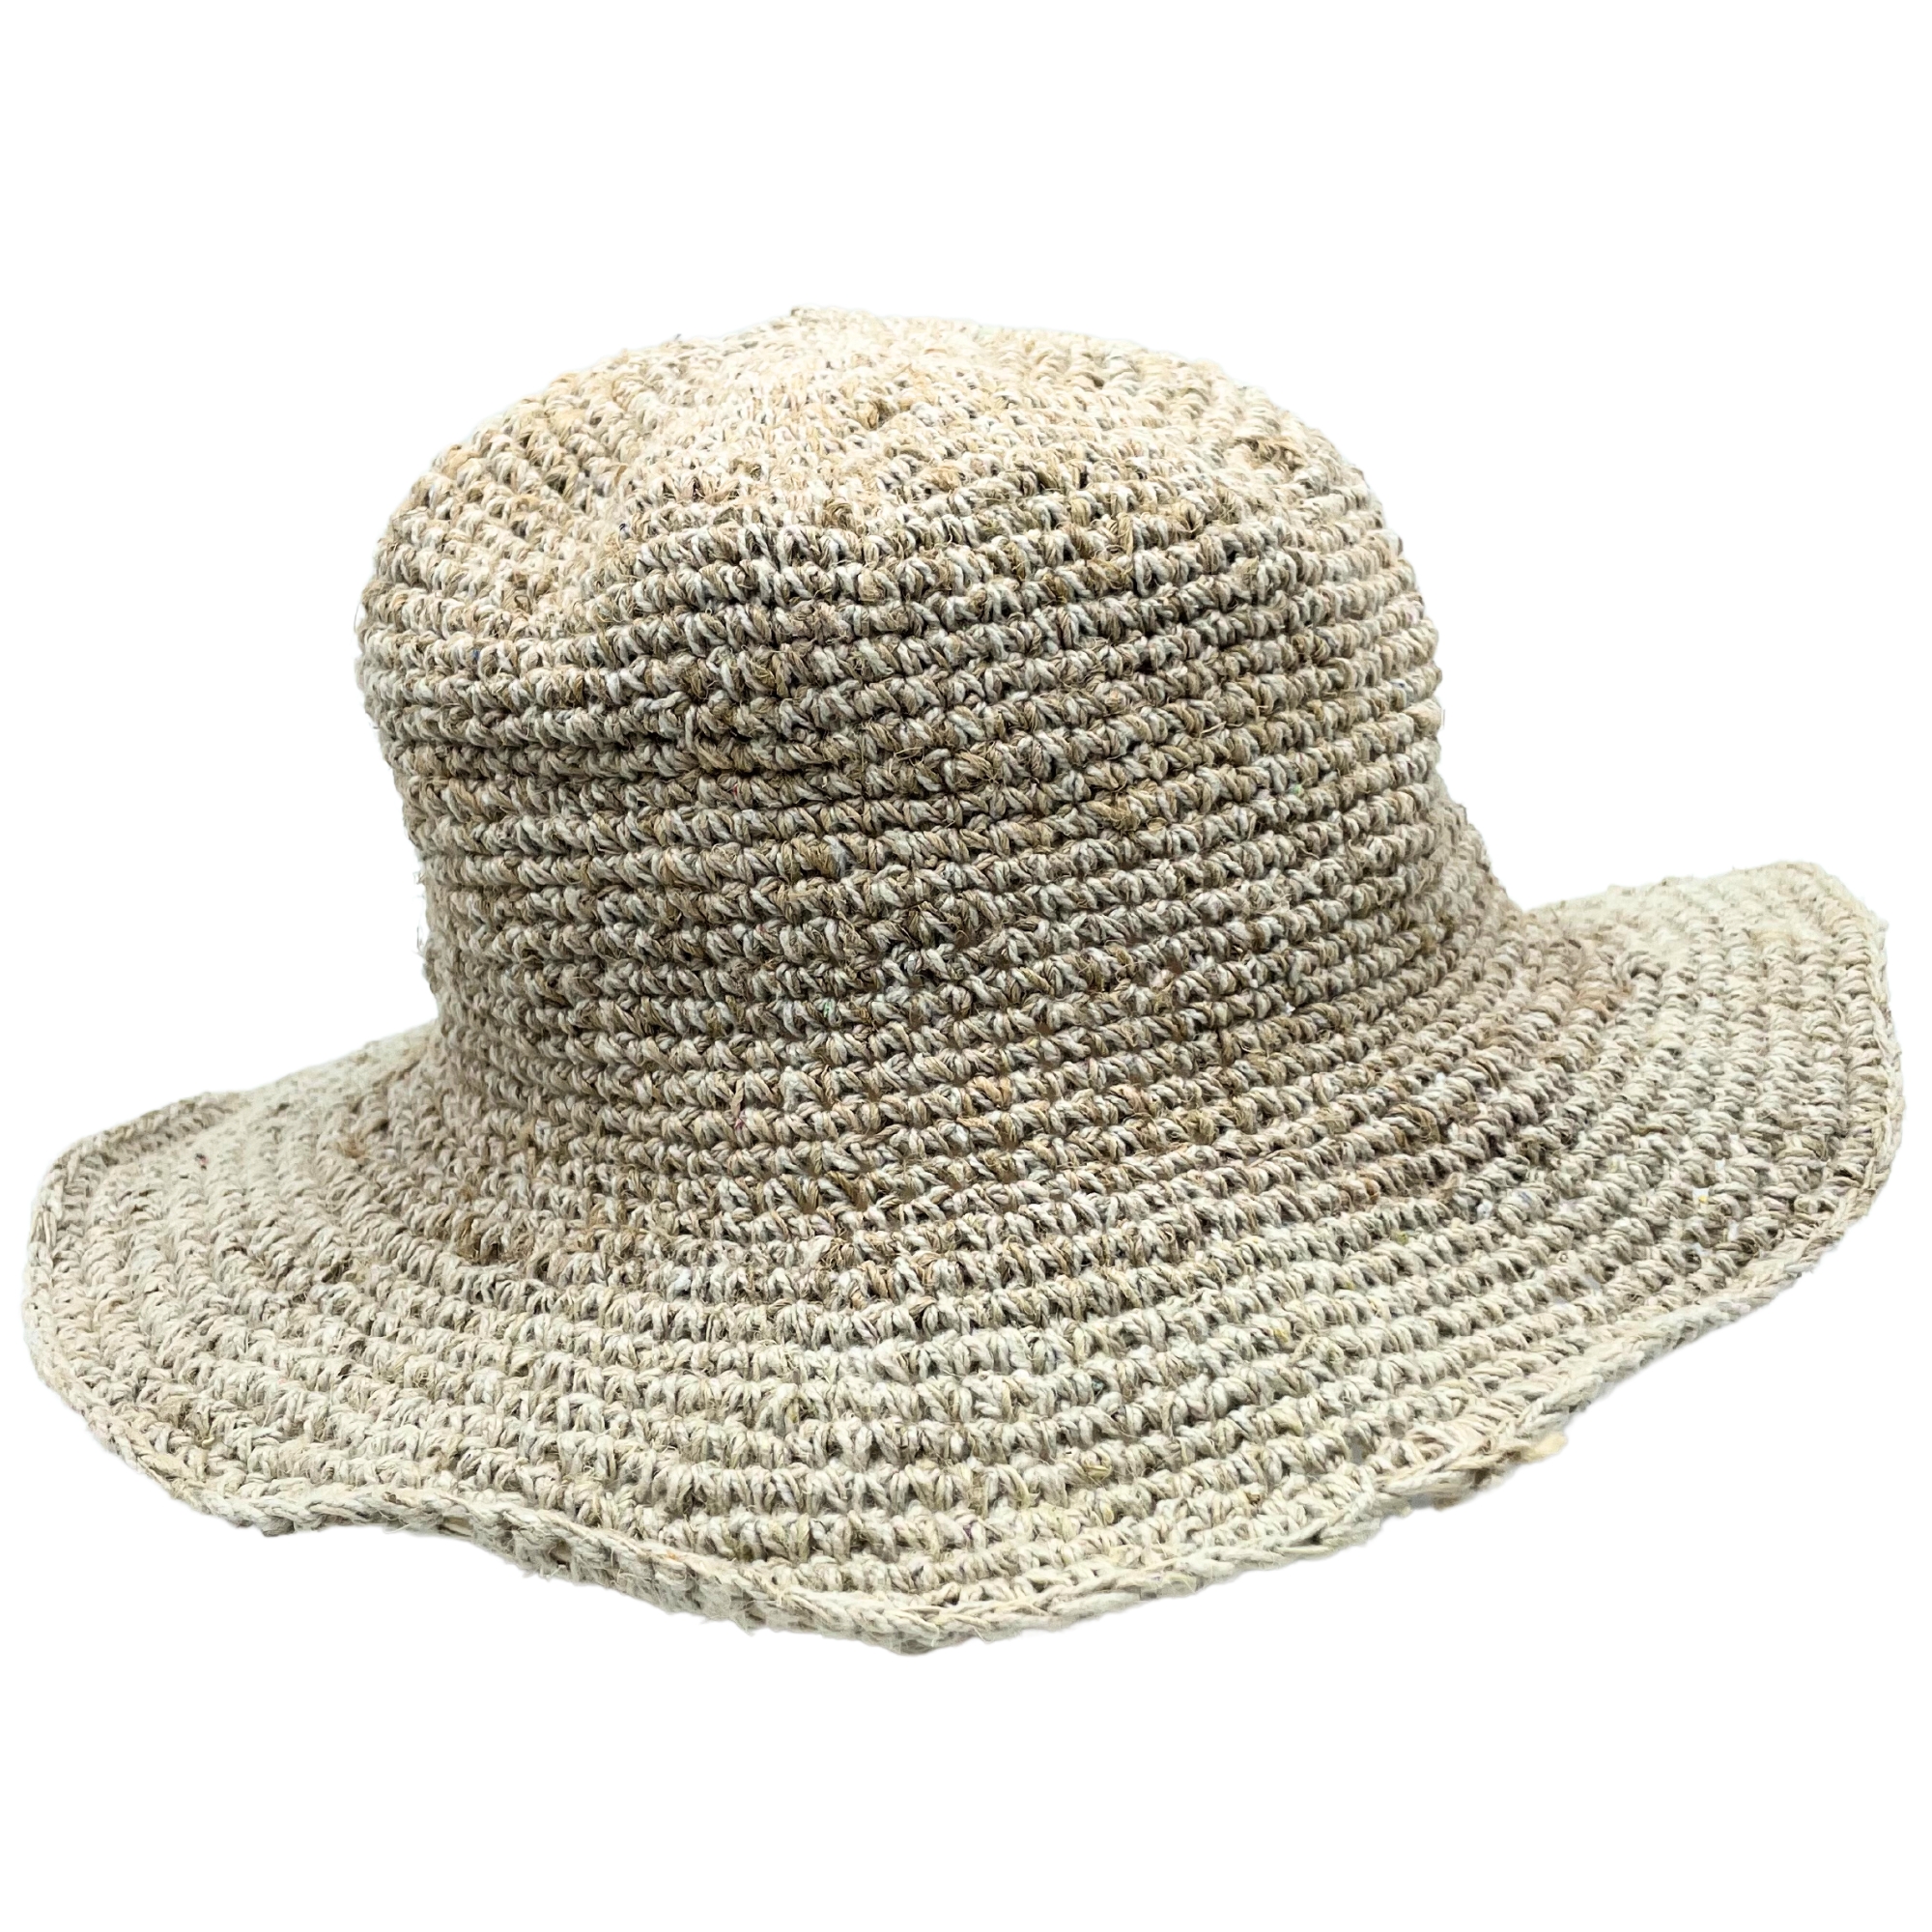 Hand-Knited Hemp & Cotton Boho Festival Hat - Natural